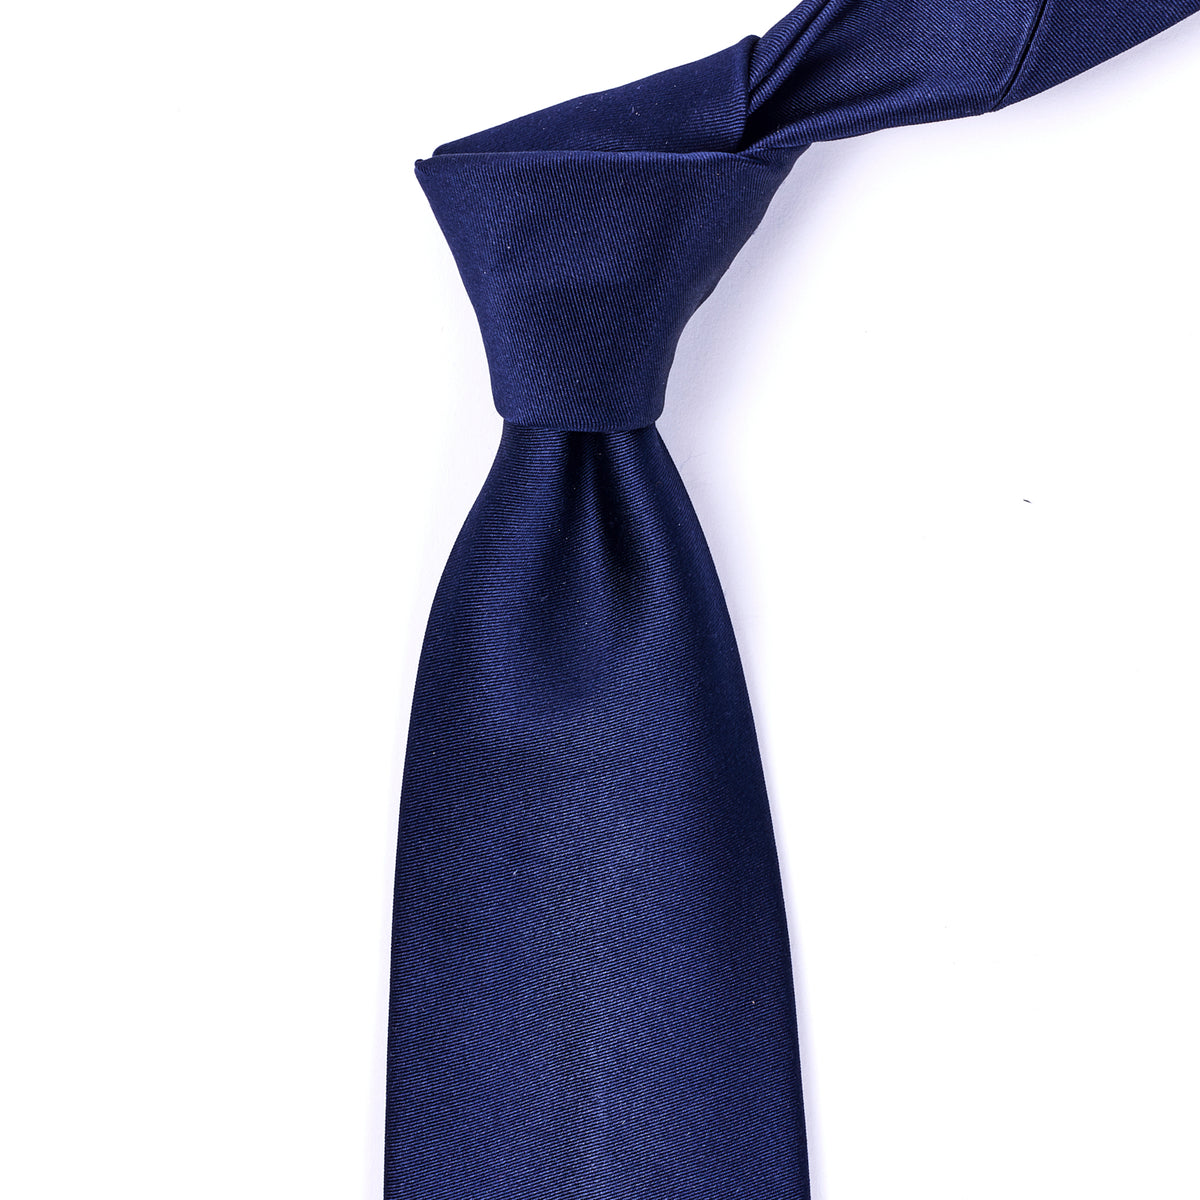 A KirbyAllison.com Sovereign Grade Midnight Blue Satin Tie.